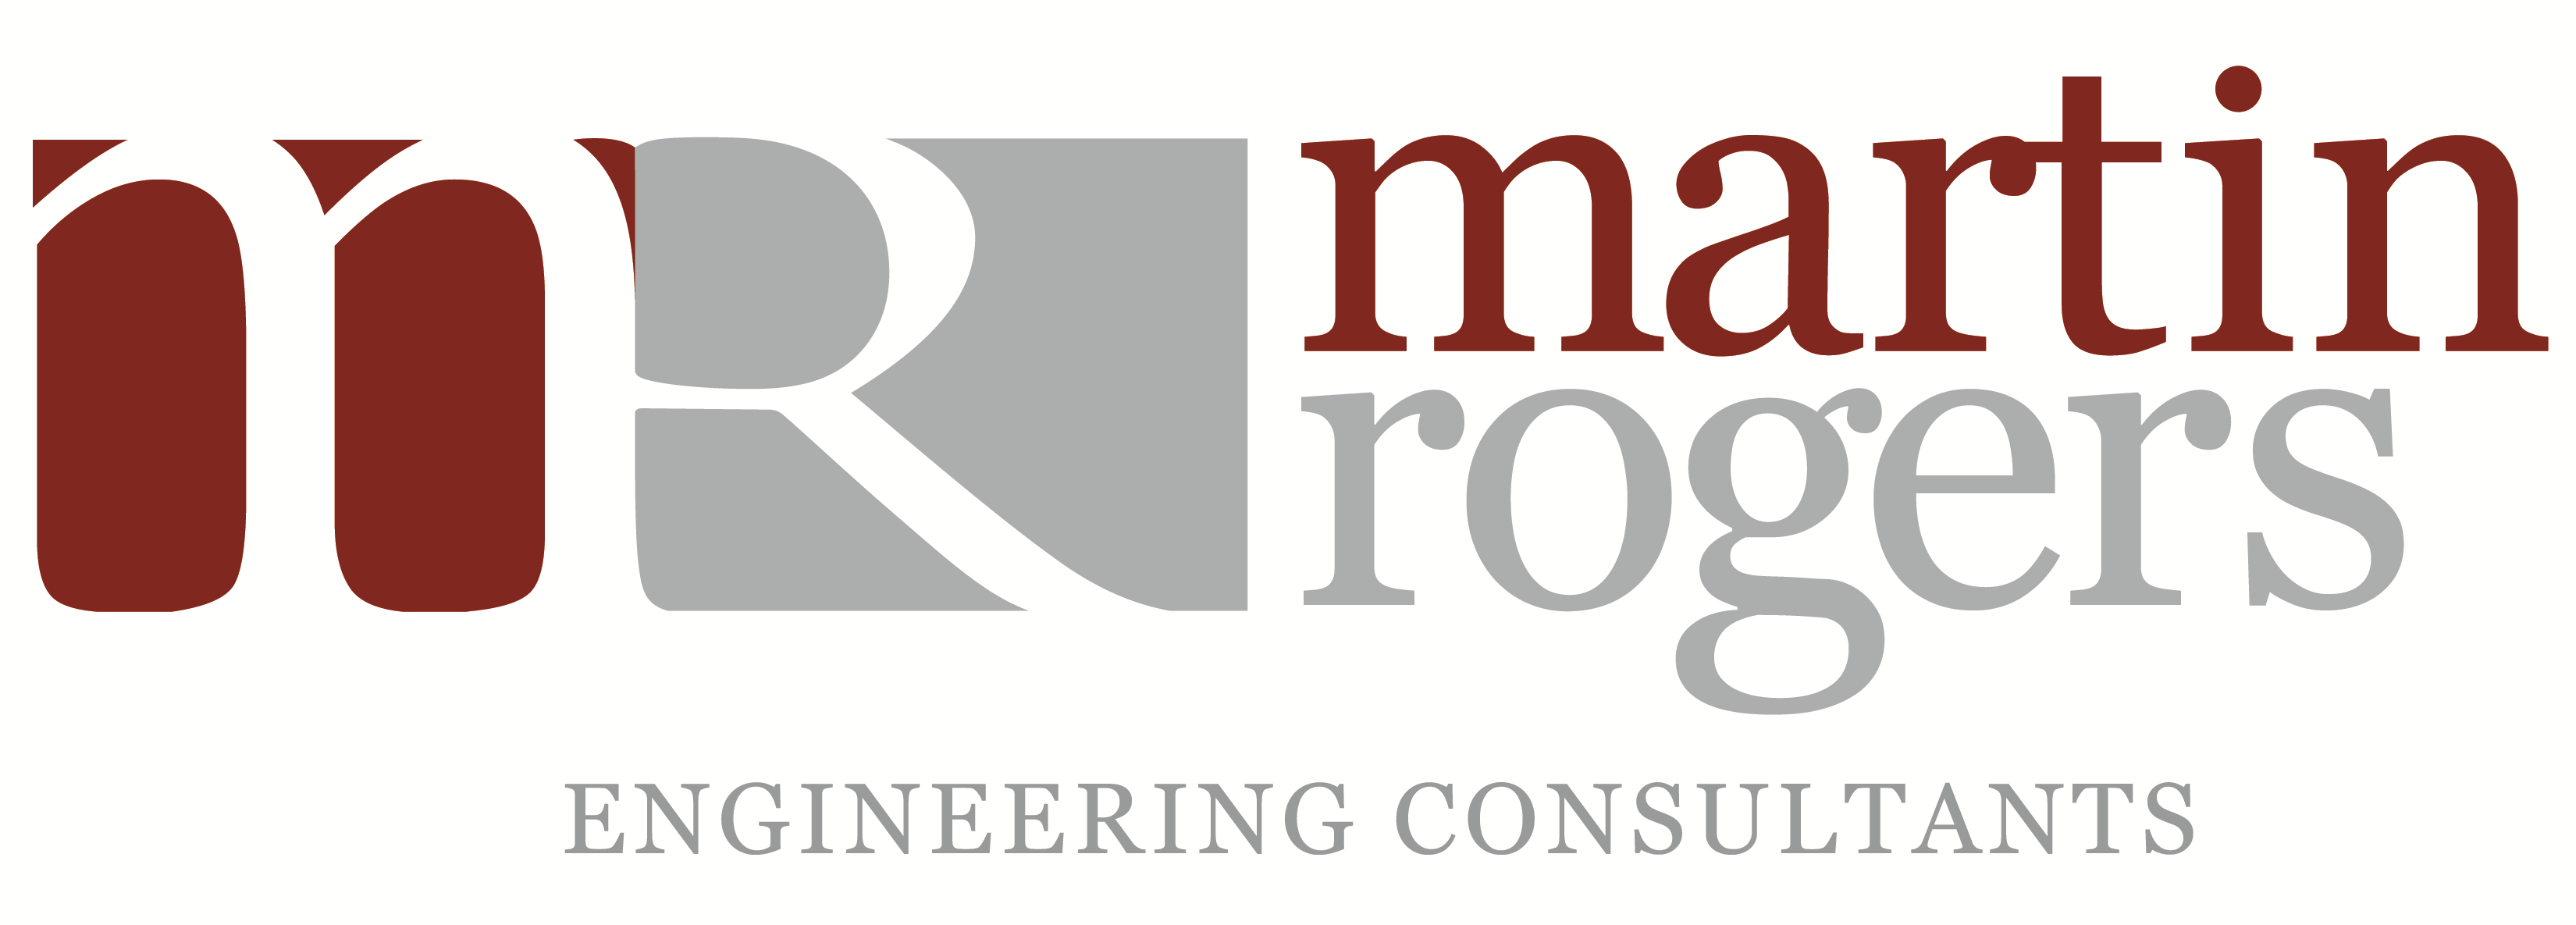 Martin Rogers Logo